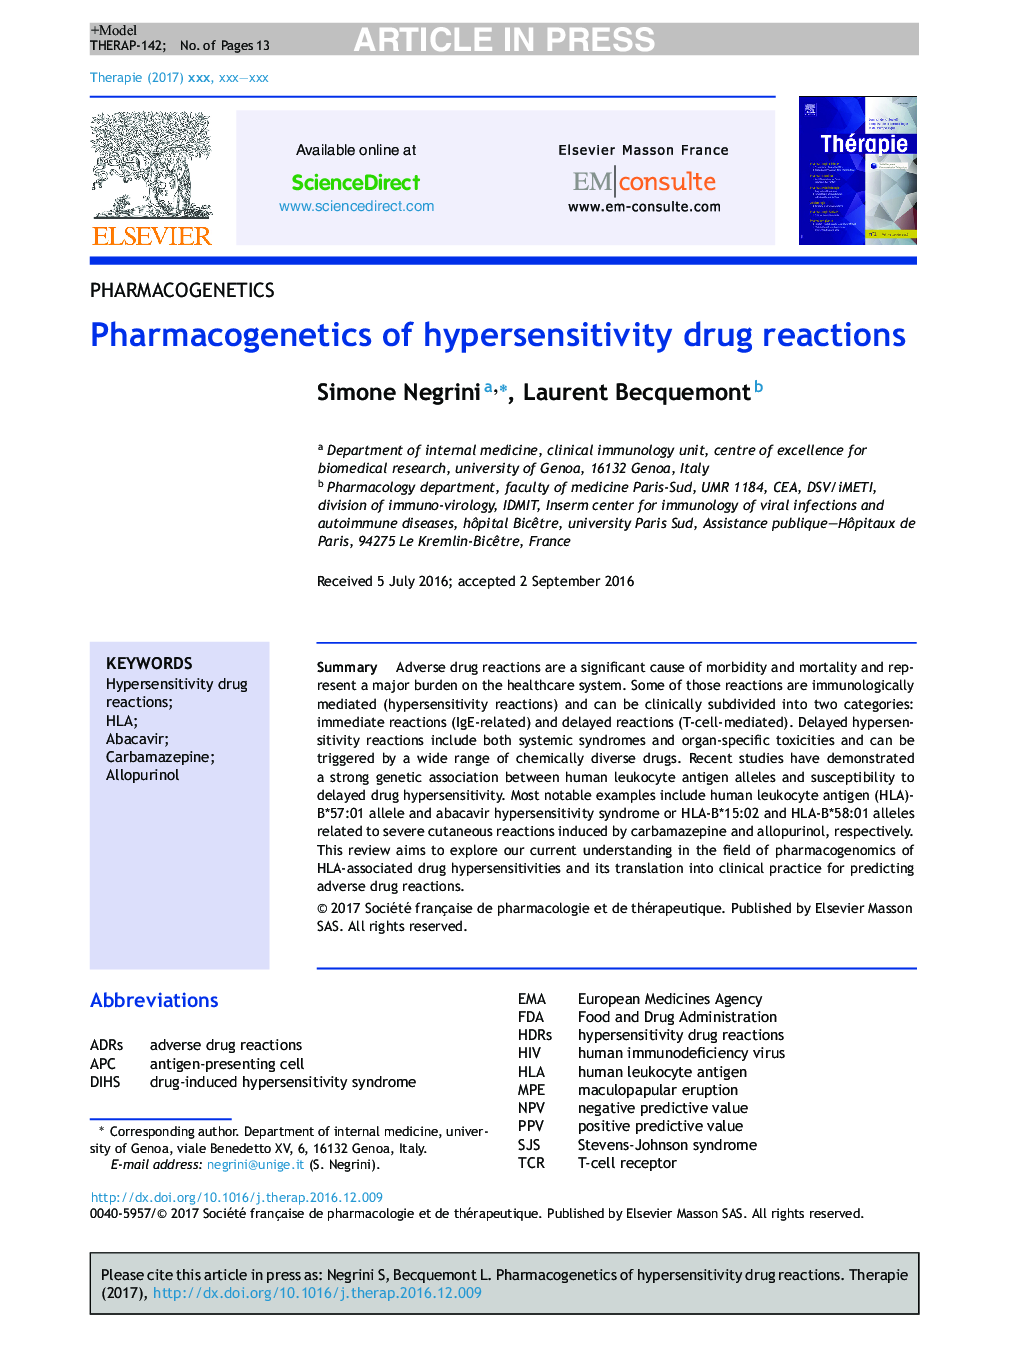 Pharmacogenetics of hypersensitivity drug reactions